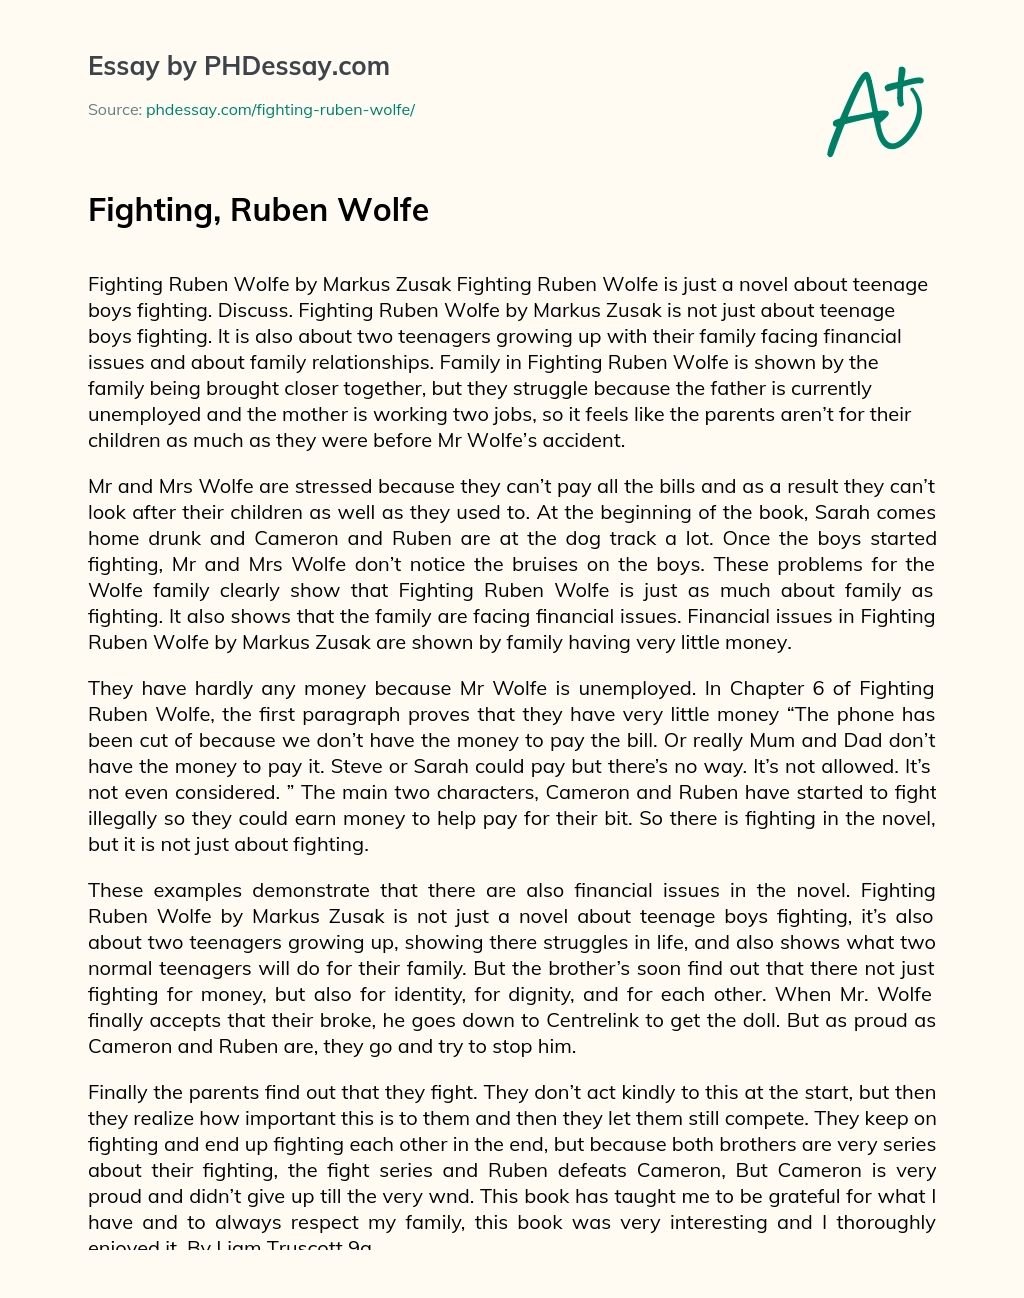 Fighting, Ruben Wolfe essay